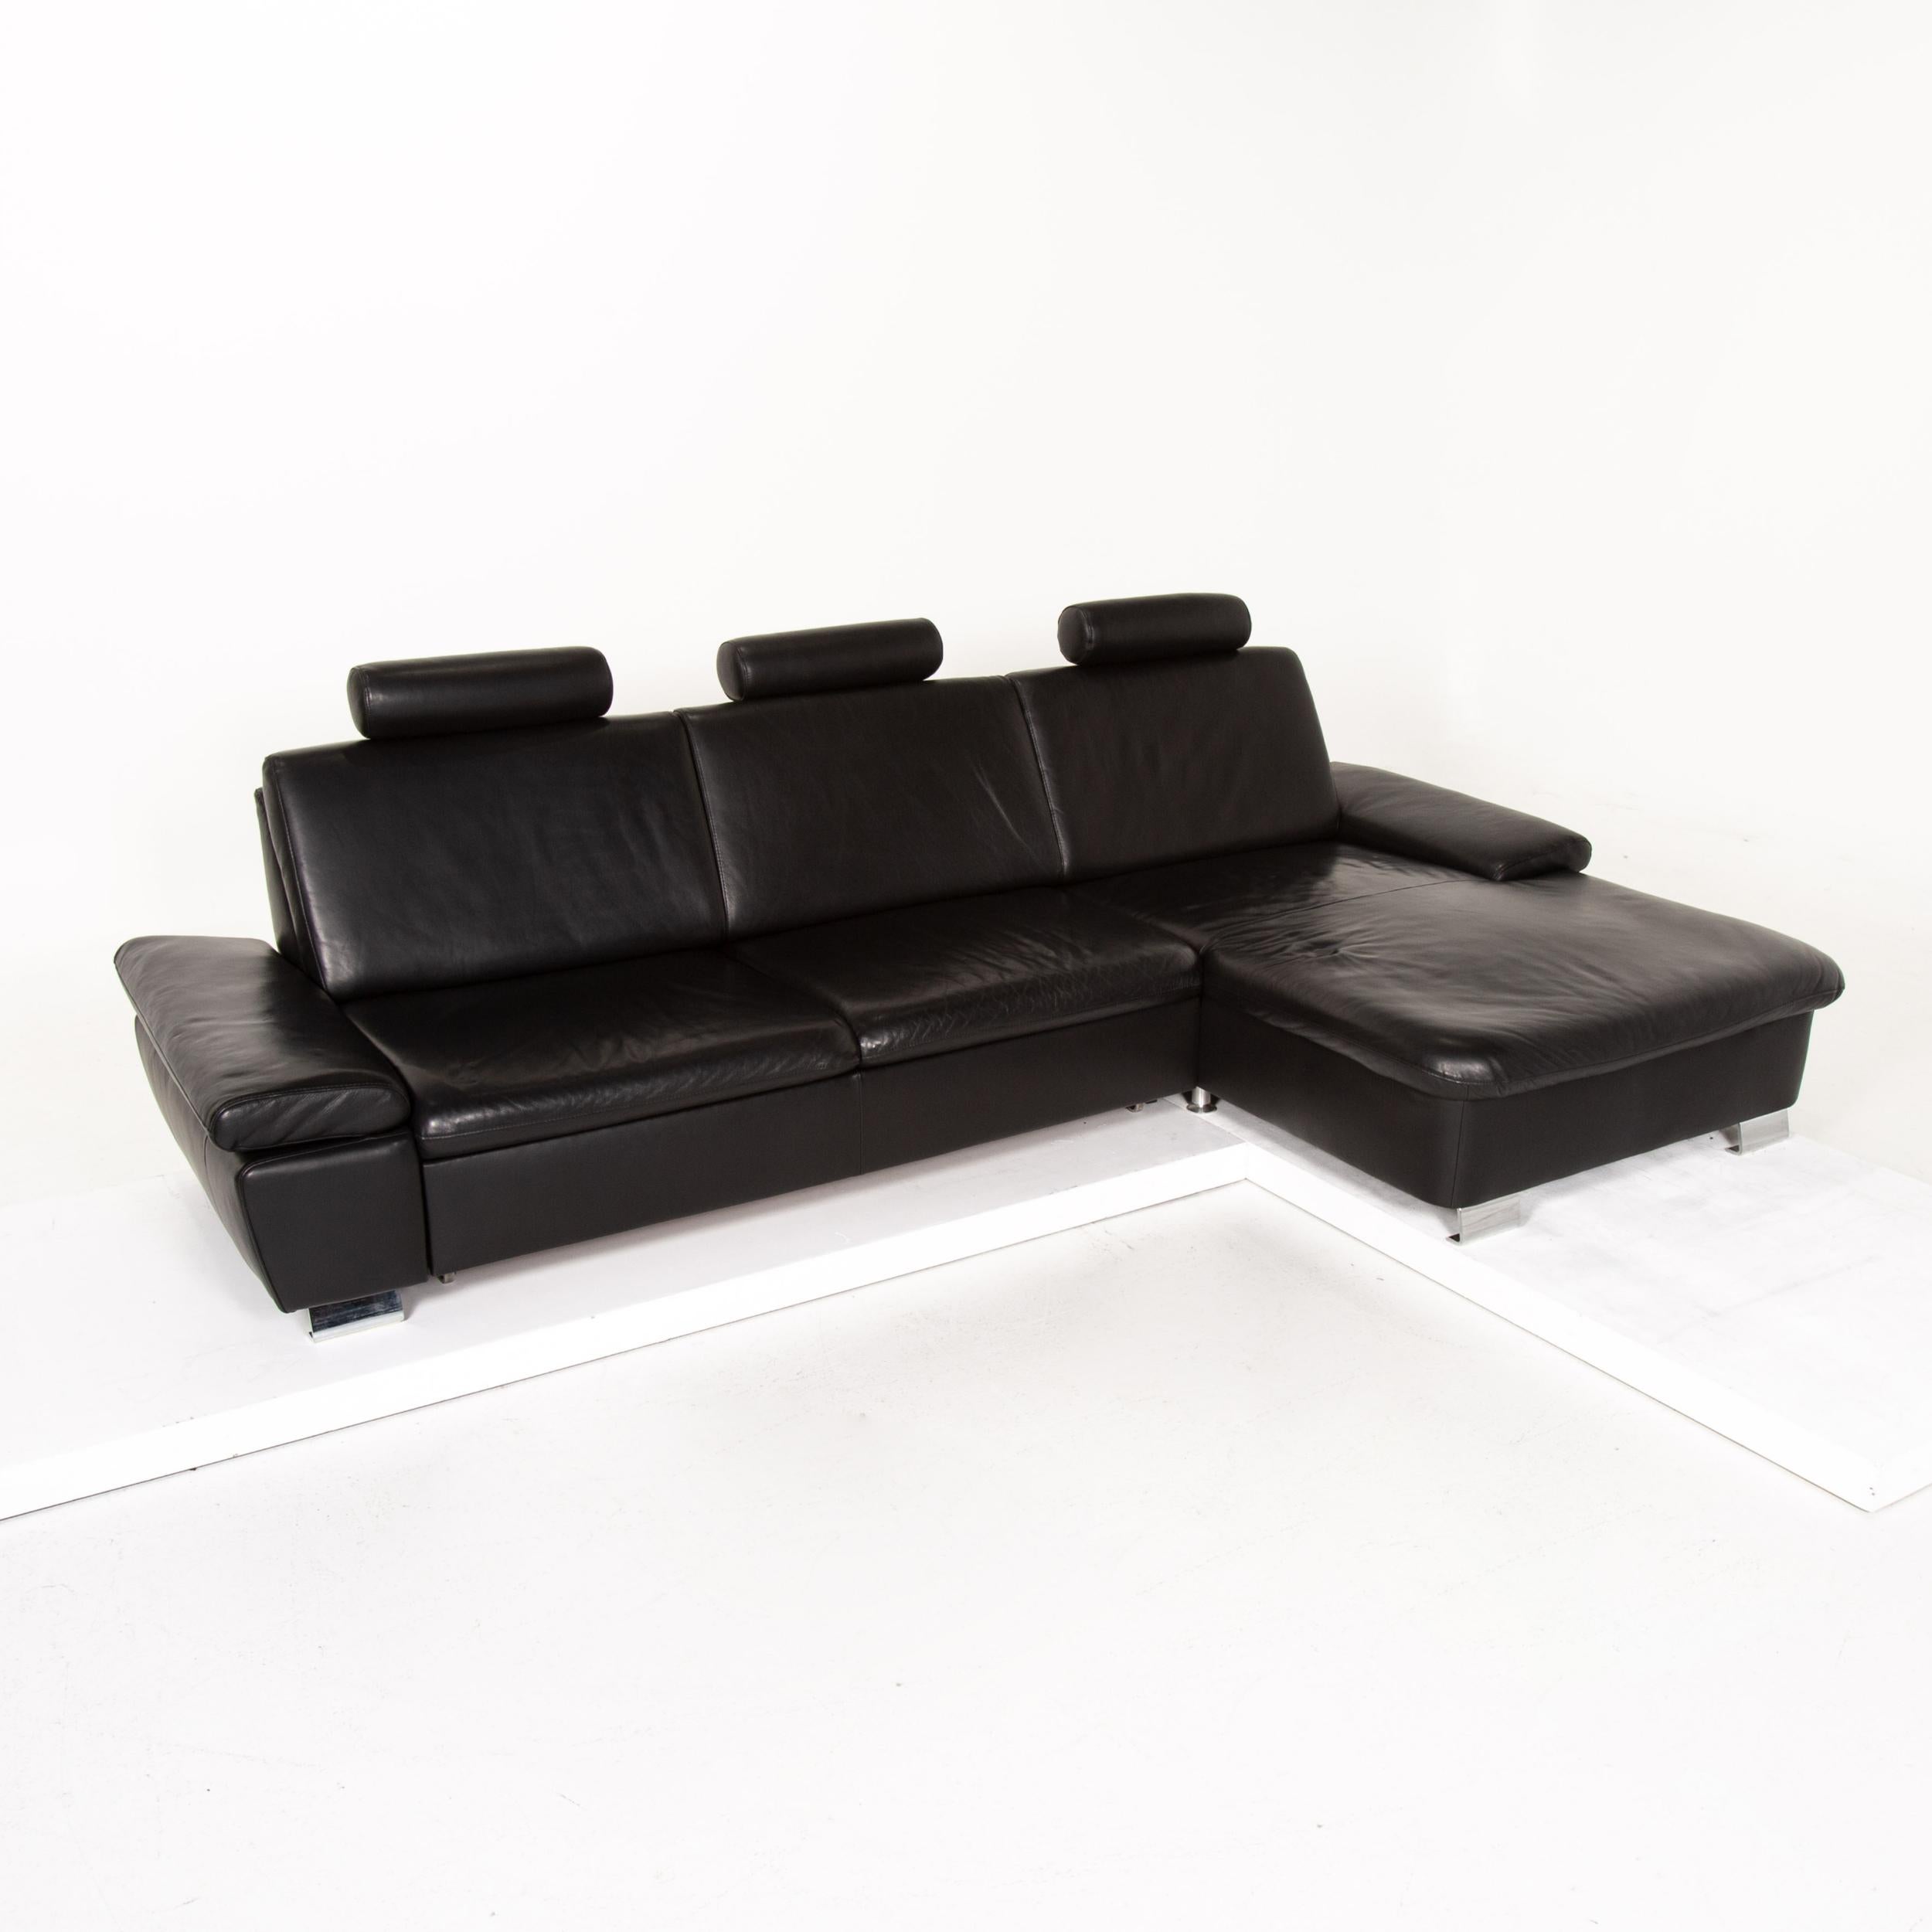 Mondo Leather Corner Sofa Black Sofa Function Sleep Function Sofa Bed Couch For Sale 2